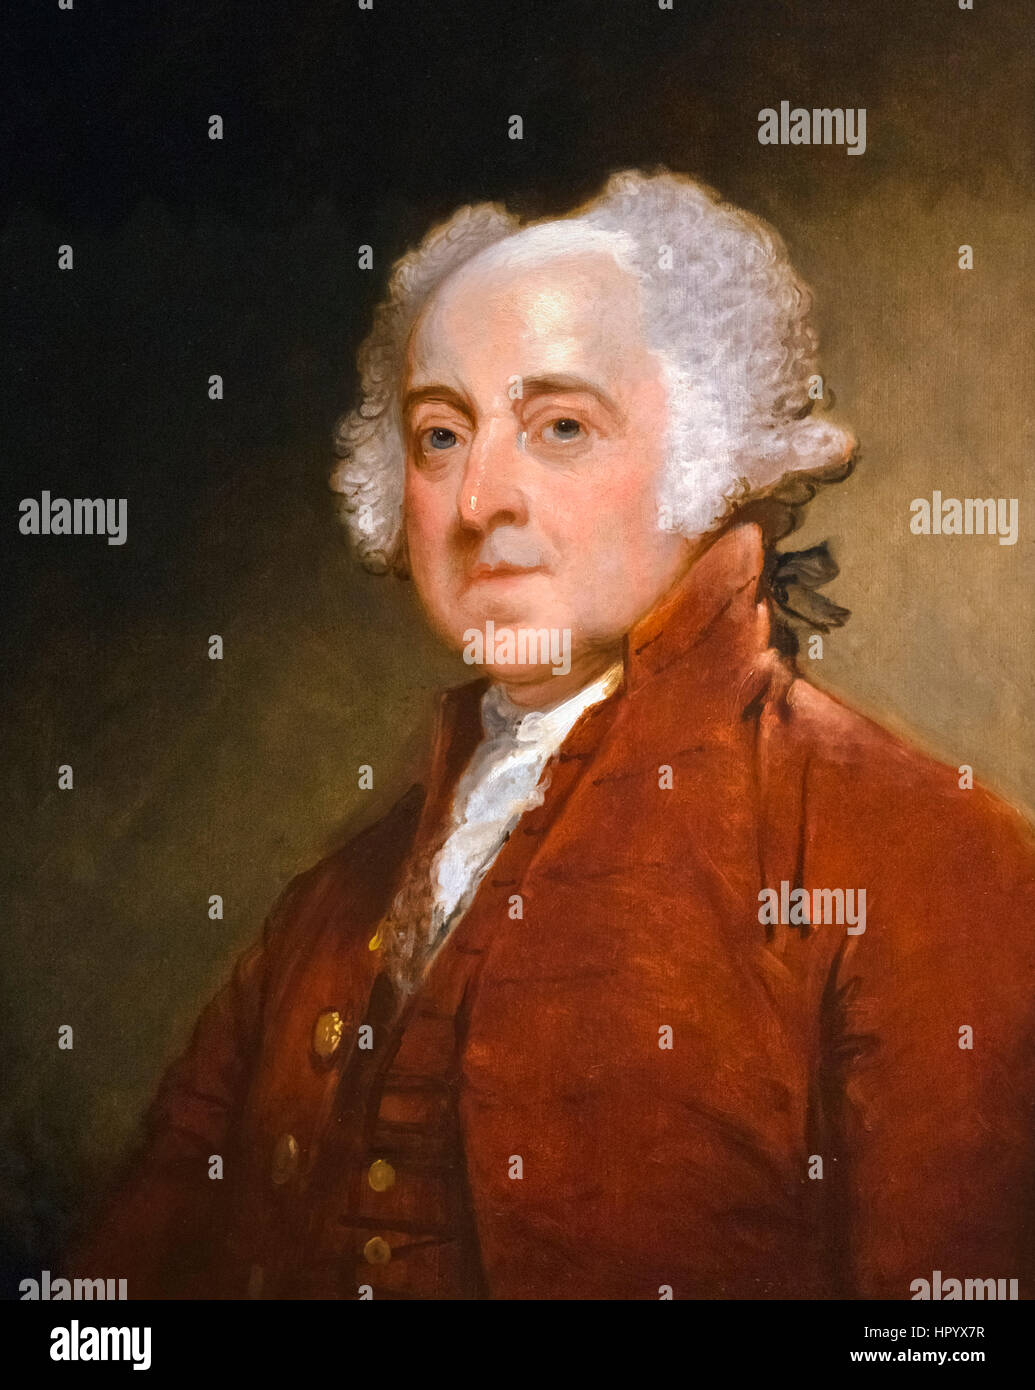 John Adams. Portrait of the 2nd US President, John Adams (1735-1826) by Gilbert Stuart, oil on wood, c.1821 Stock Photo